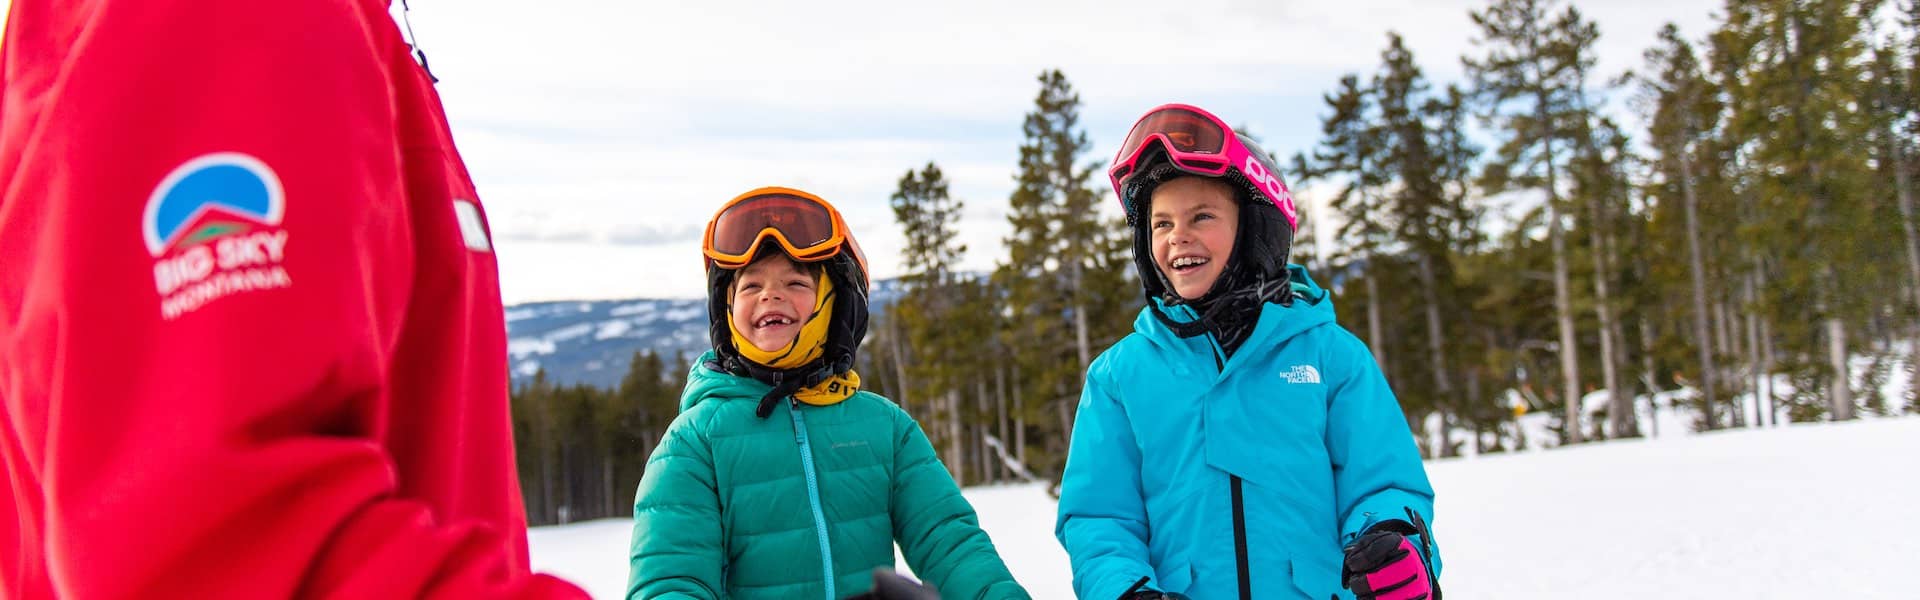 Mini Camp Ski & Snowboard Lessons